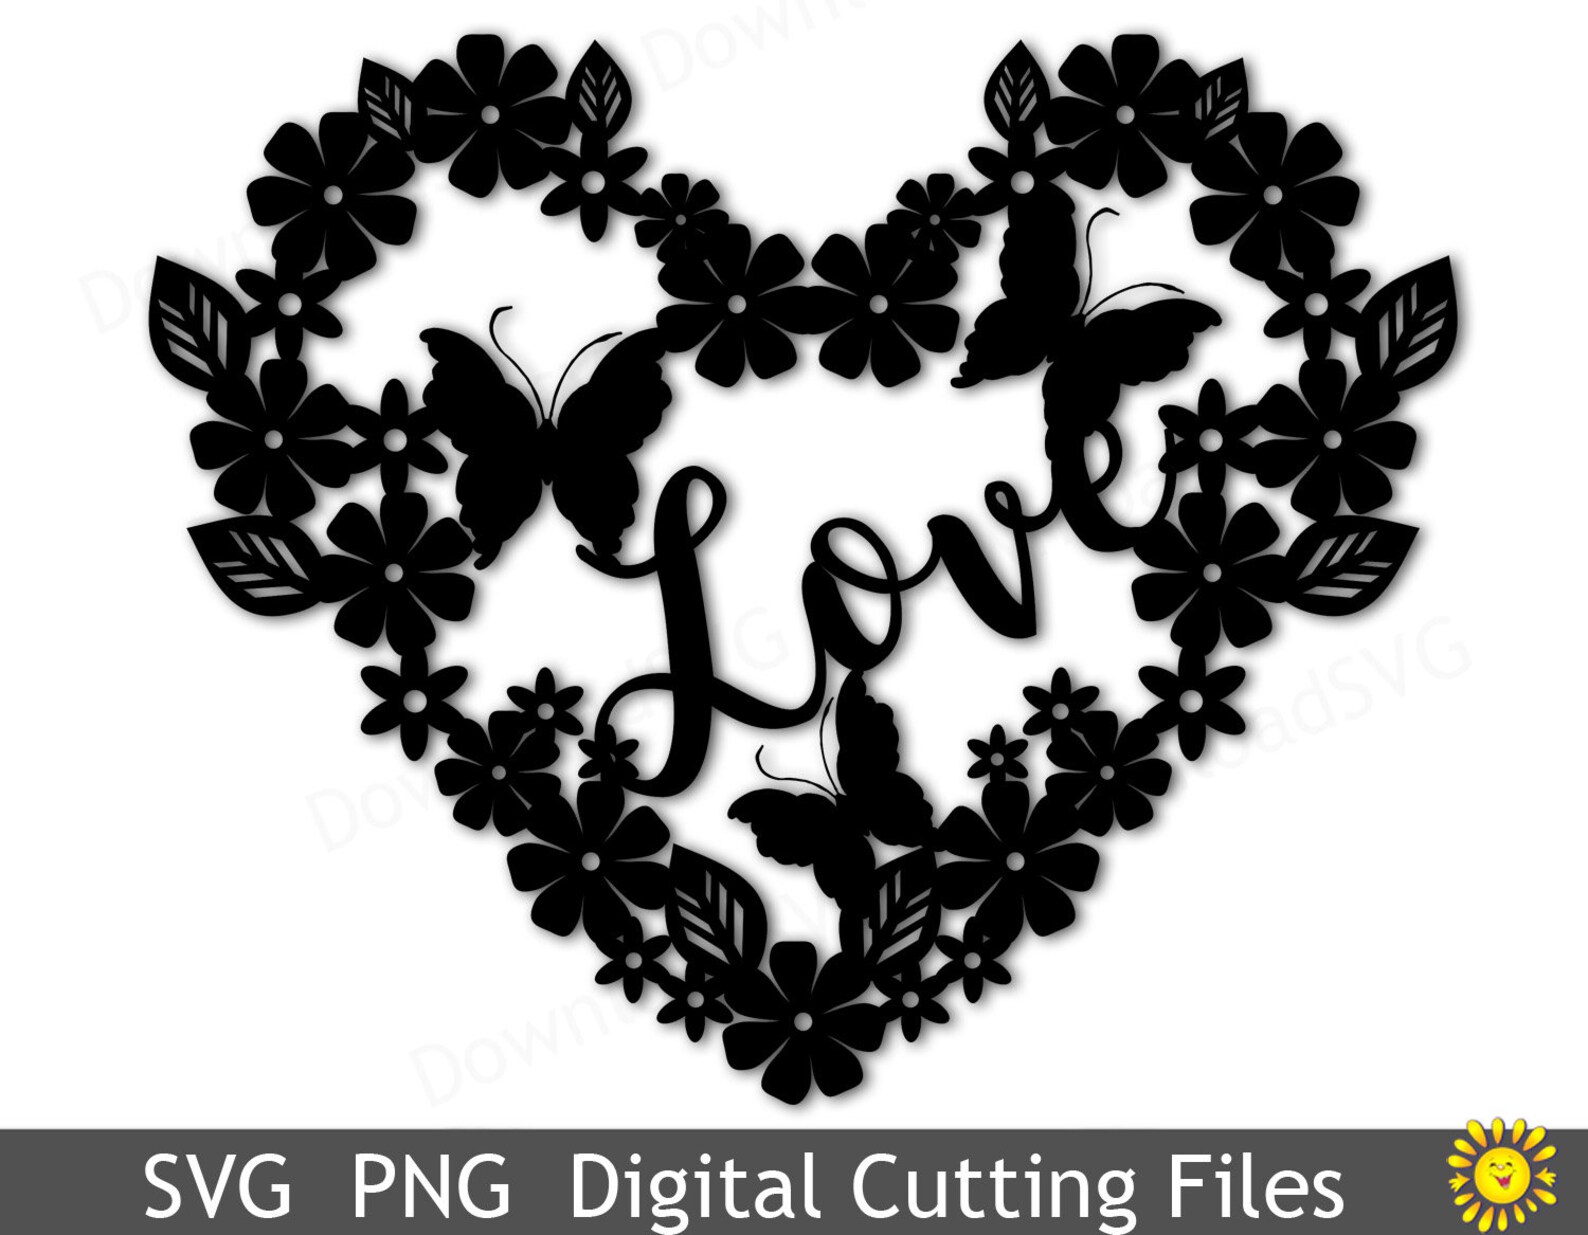 SVG cutting file template Heart Love Butterflies Flowers image 0.